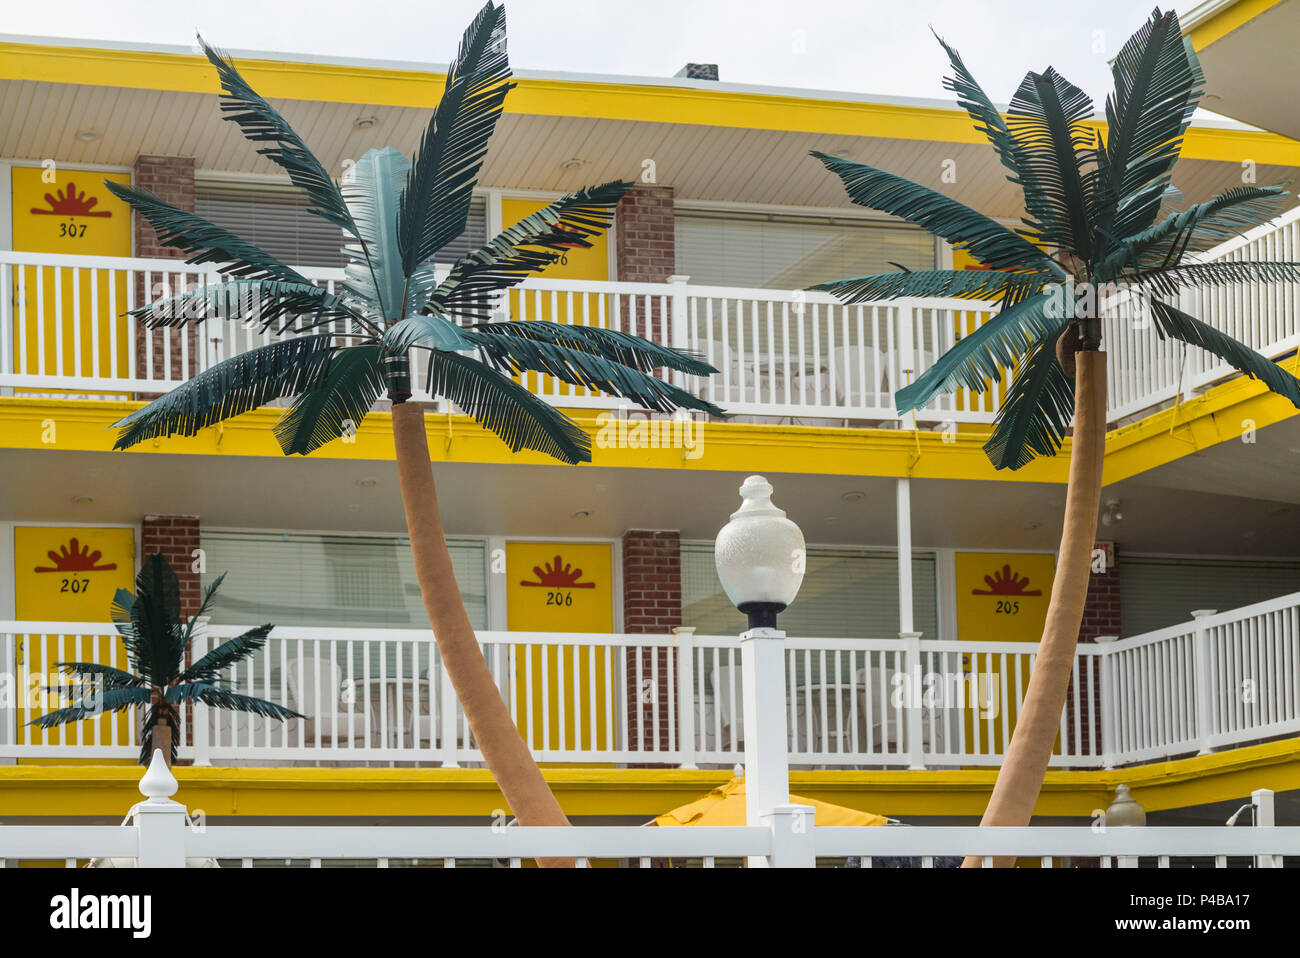 USA, New Jersey, The Jersey Shore, Wildwoods, 1950s-era Doo-Wop architecture, motel palms Stock Photo